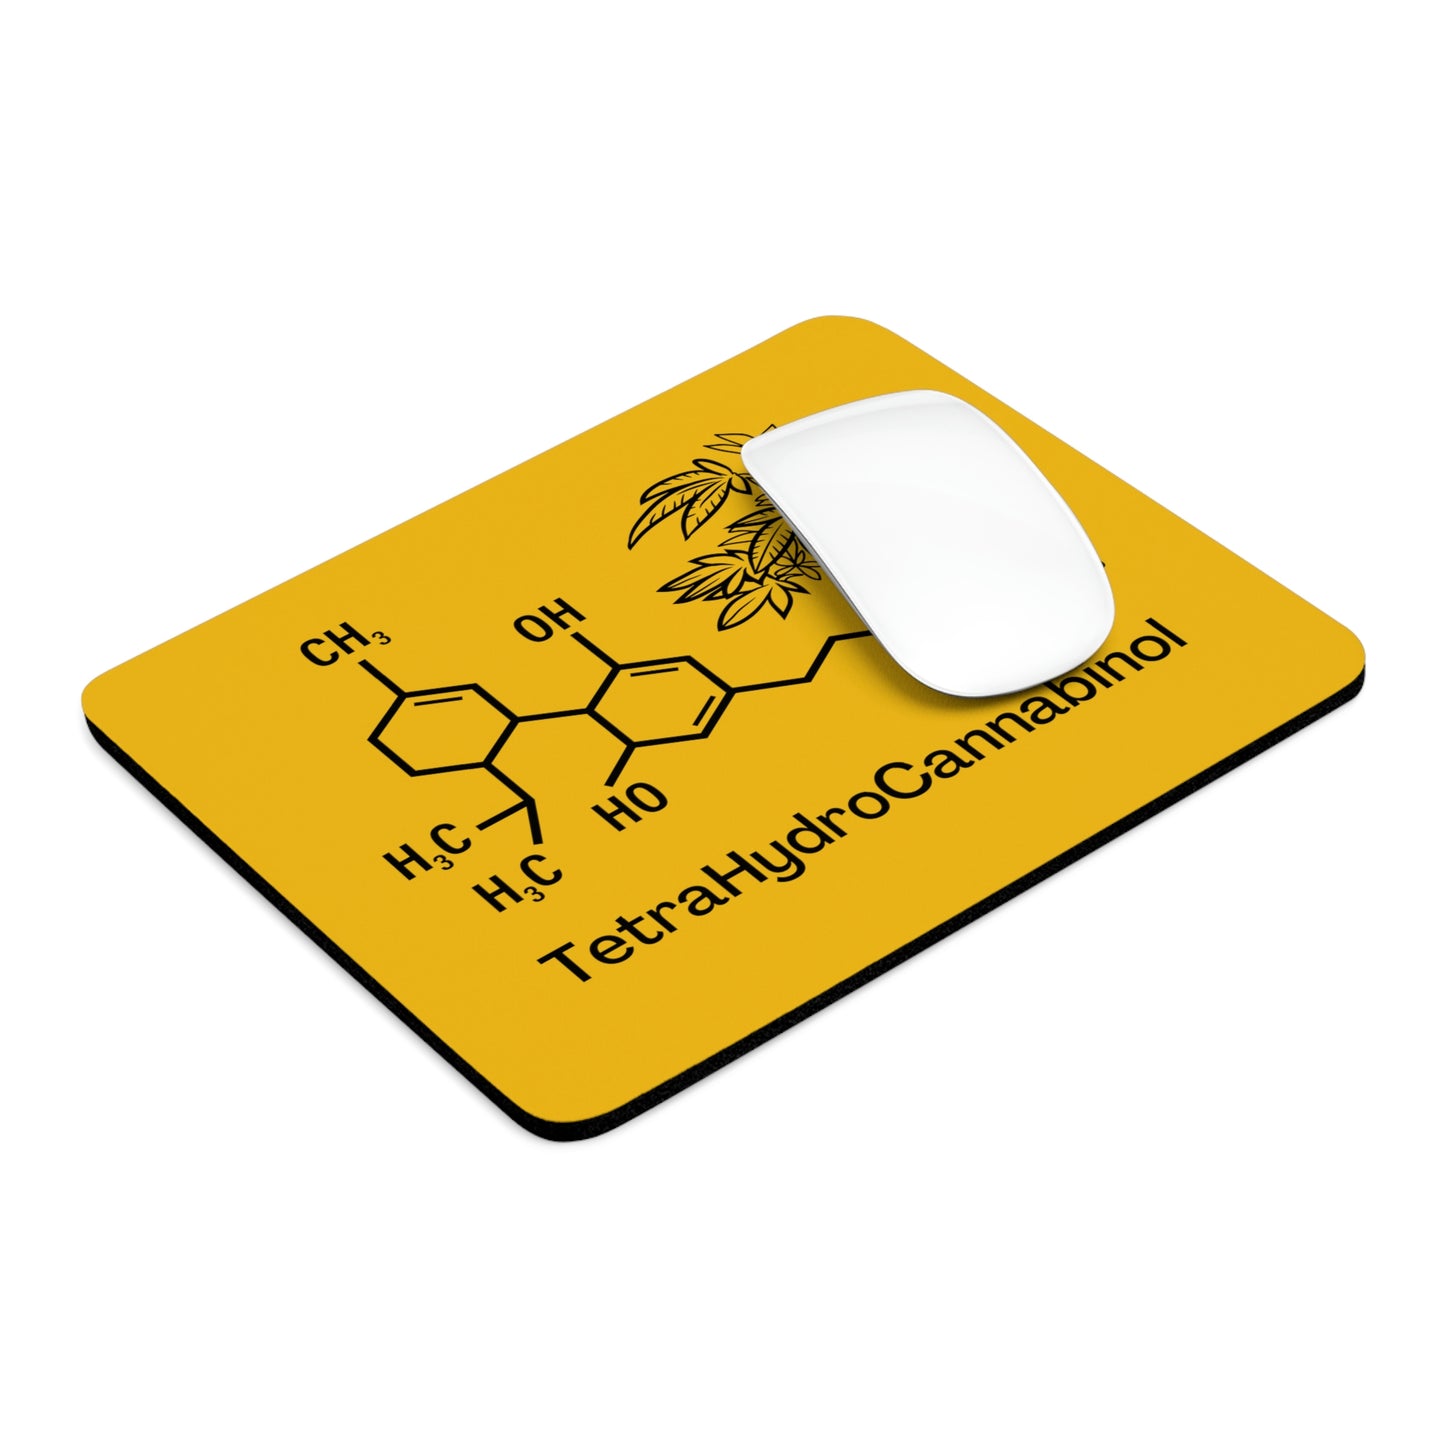 a yellow Tetrahydrocannabinol (THC) Mouse Pad with the word tetrahydrocannabinol on it.